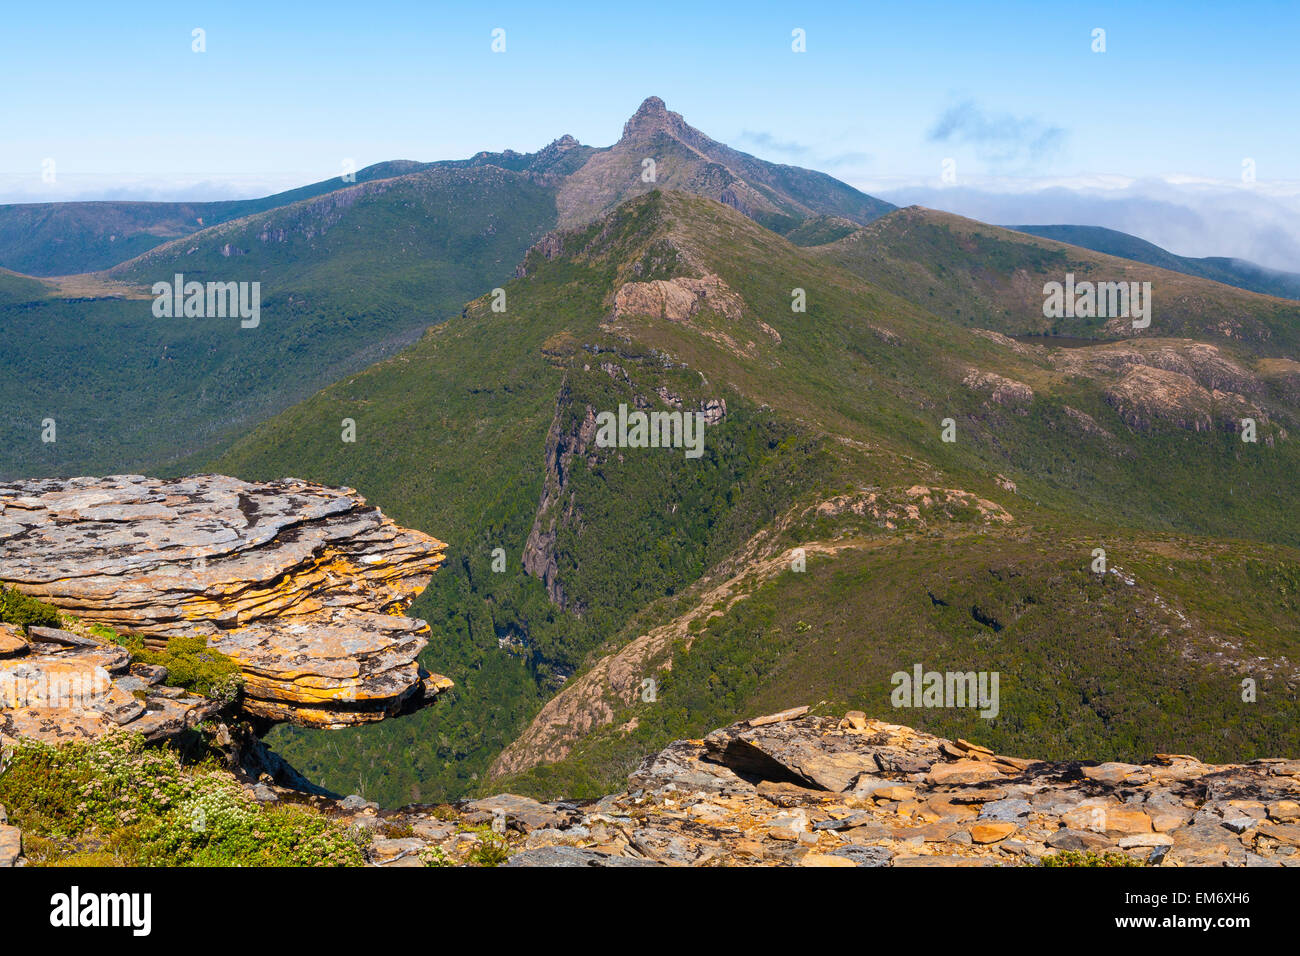 Pico Pindars - Southwest National Park - Tasmania - Australia Foto de stock